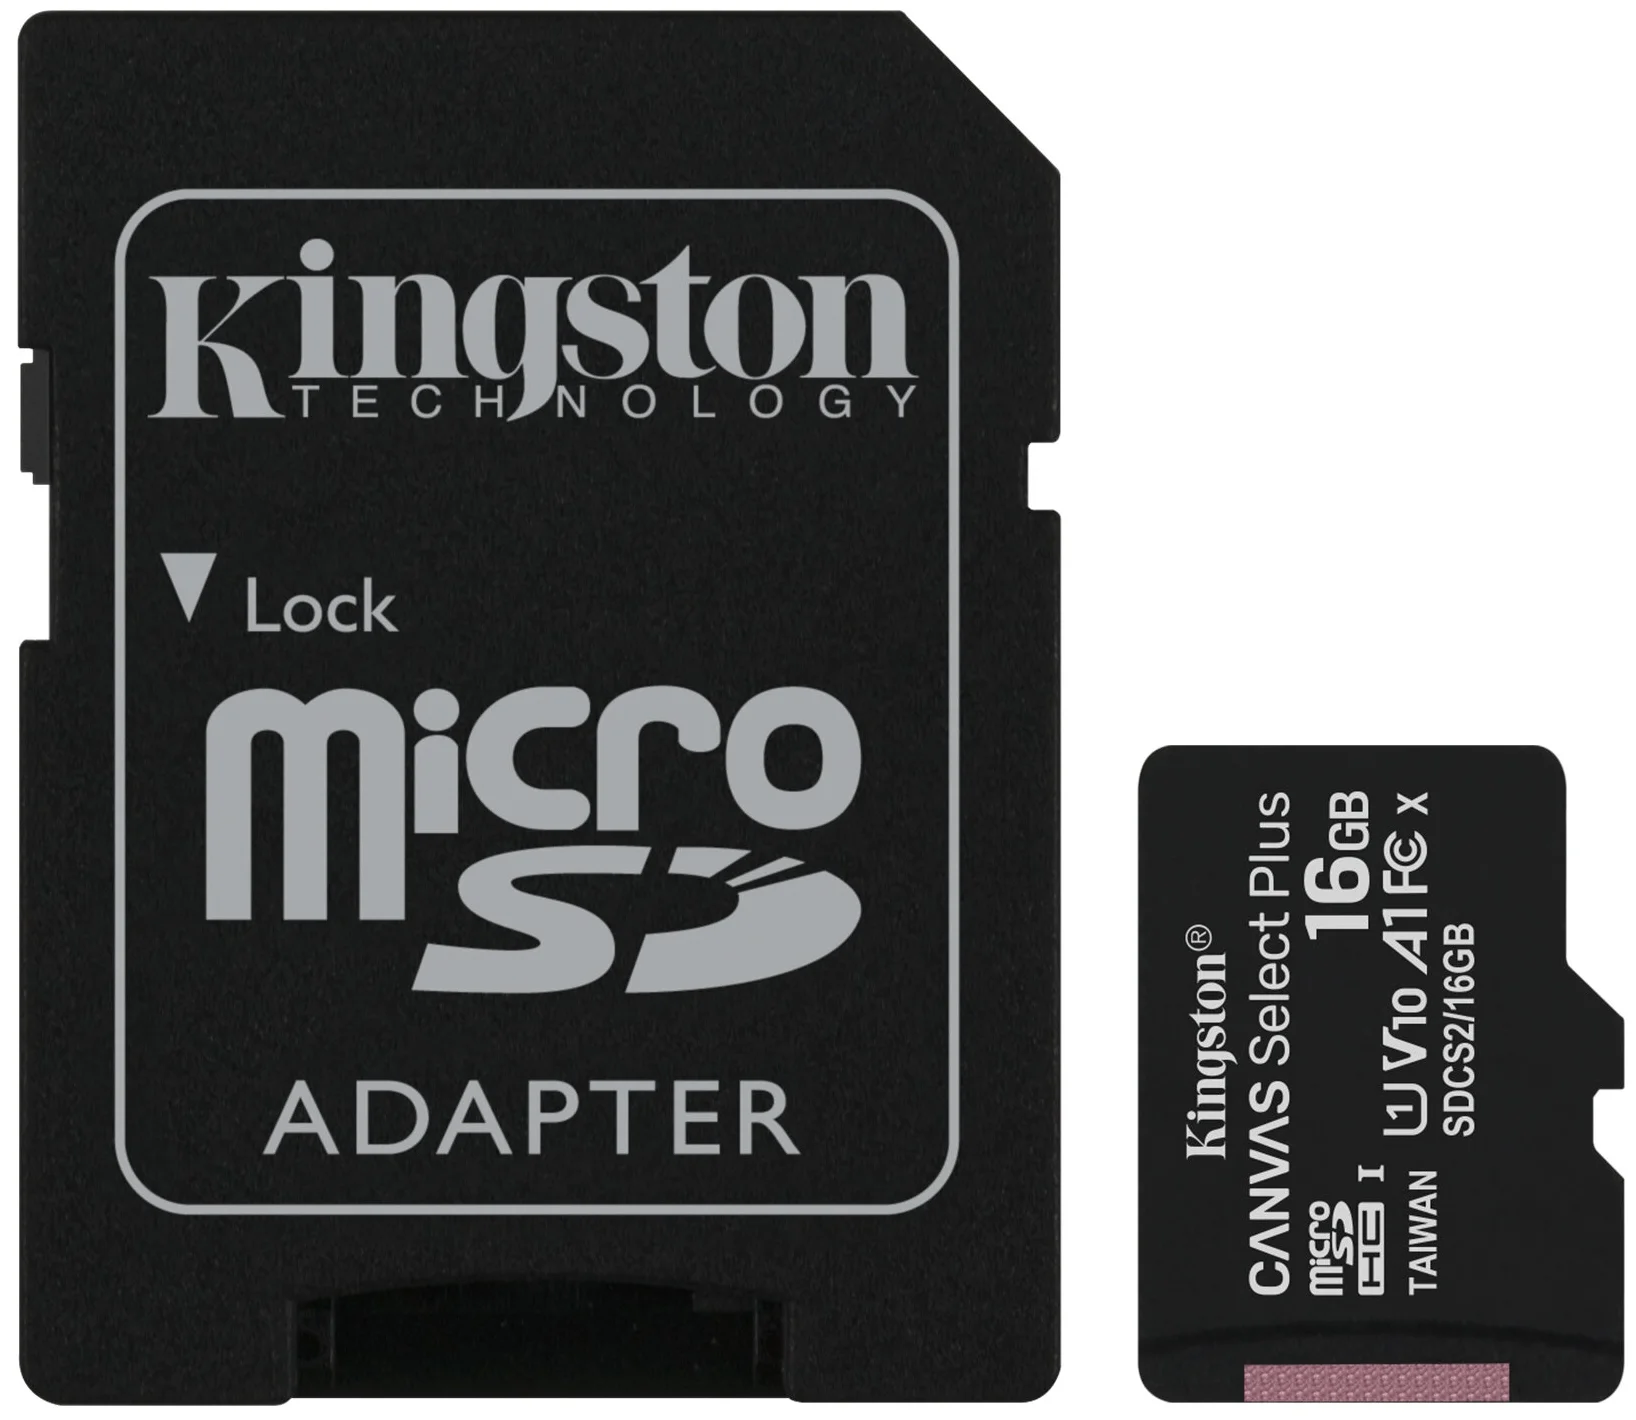 Карта памяти Kingston MicroSD 16Gb Class 10 UHS-I (80 Mb/s) с SD адаптером в Челябинске купить по недорогим ценам с доставкой